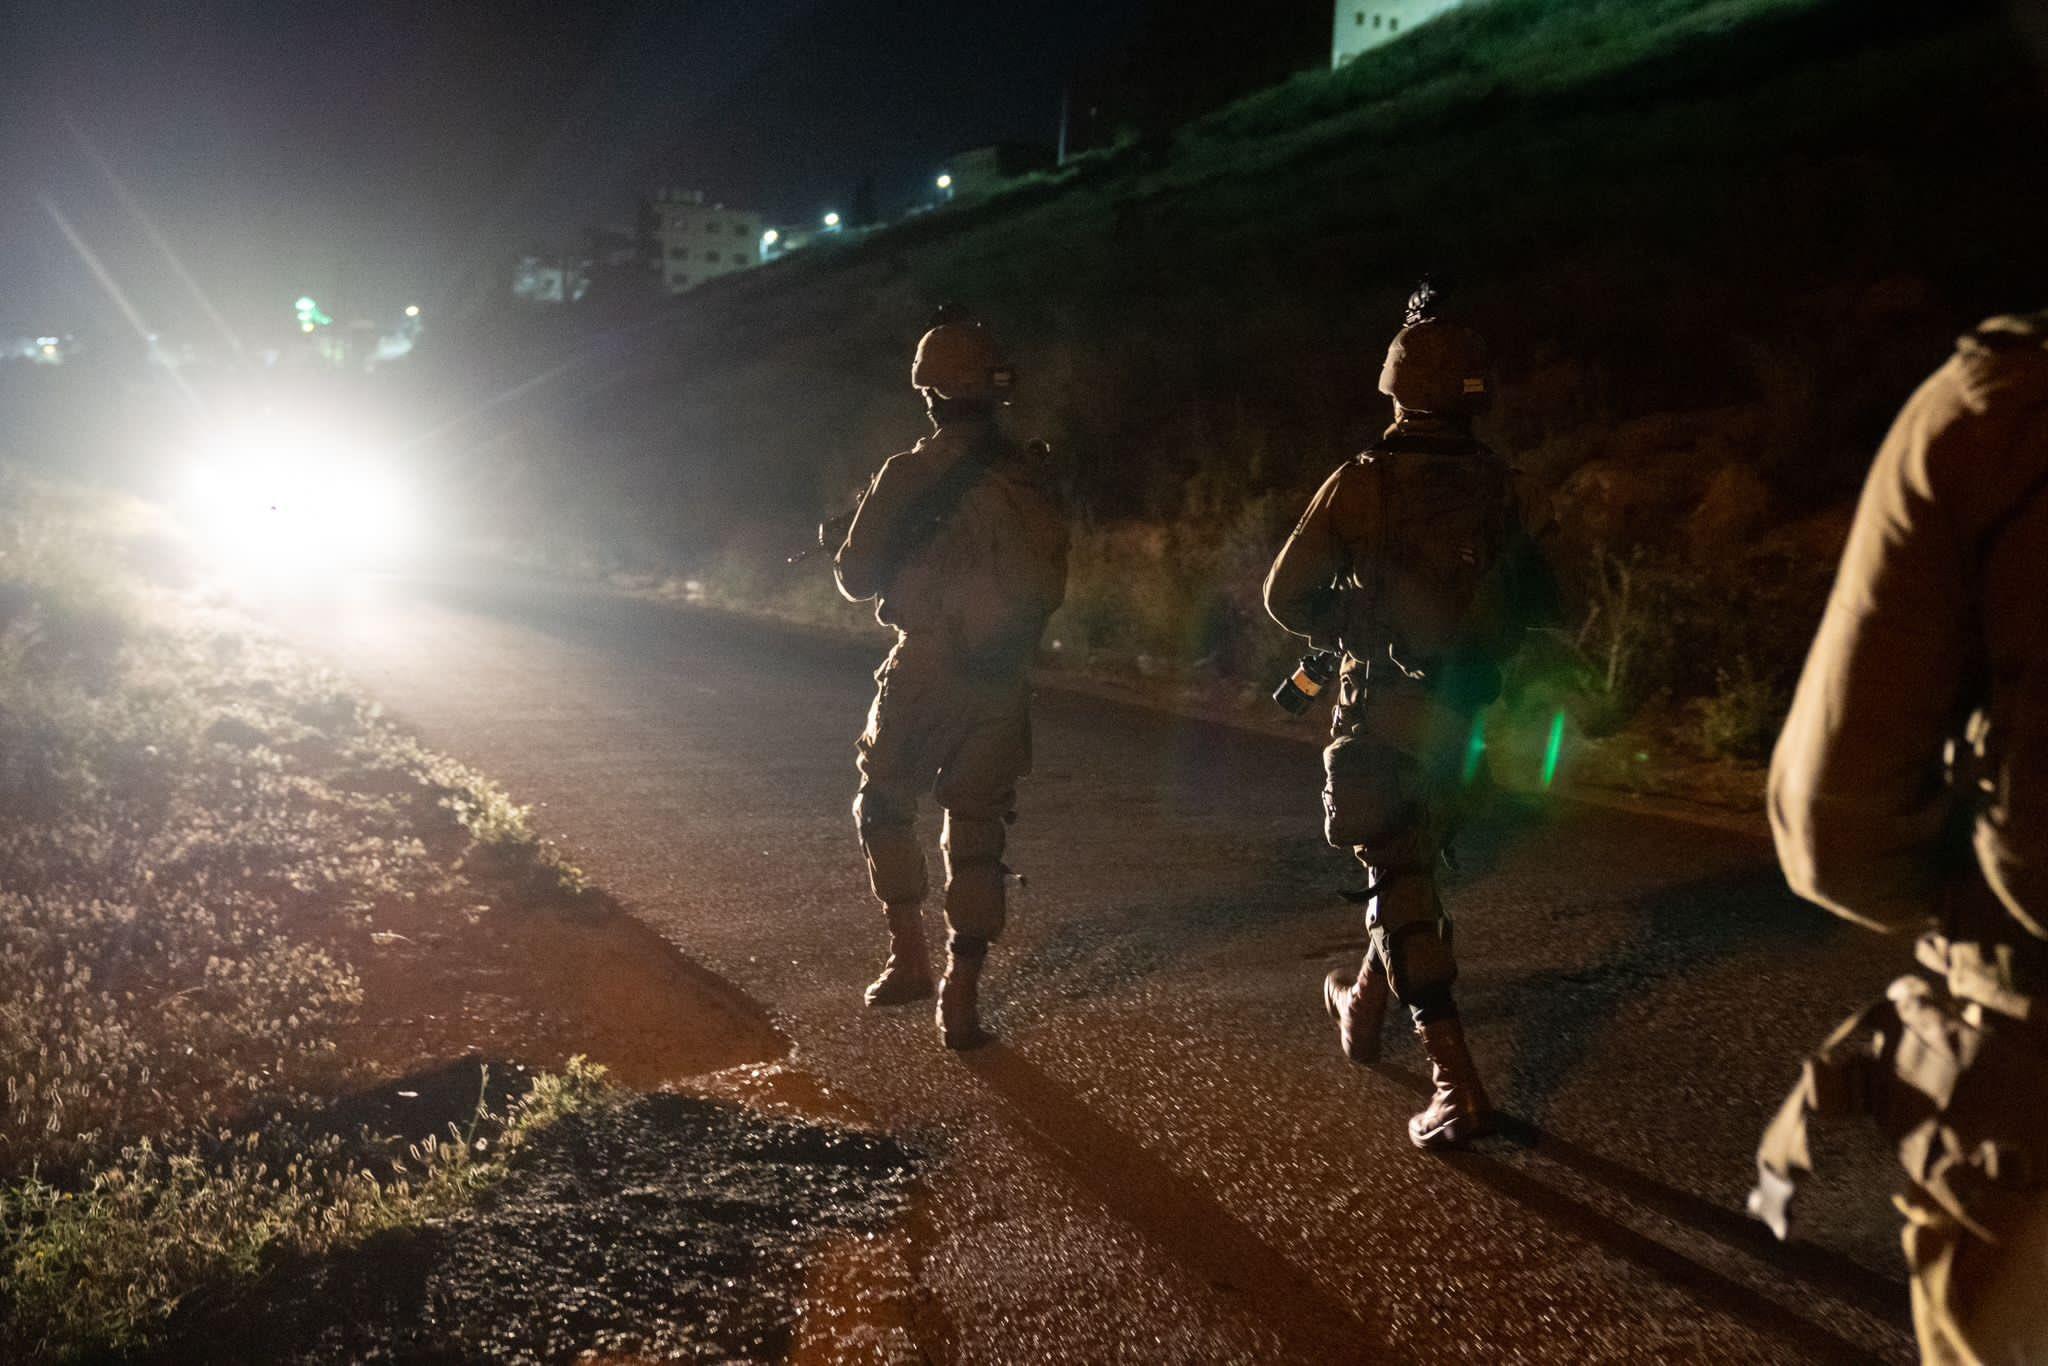 Israeli fcounterterrorism forces in West Bank IDF photo